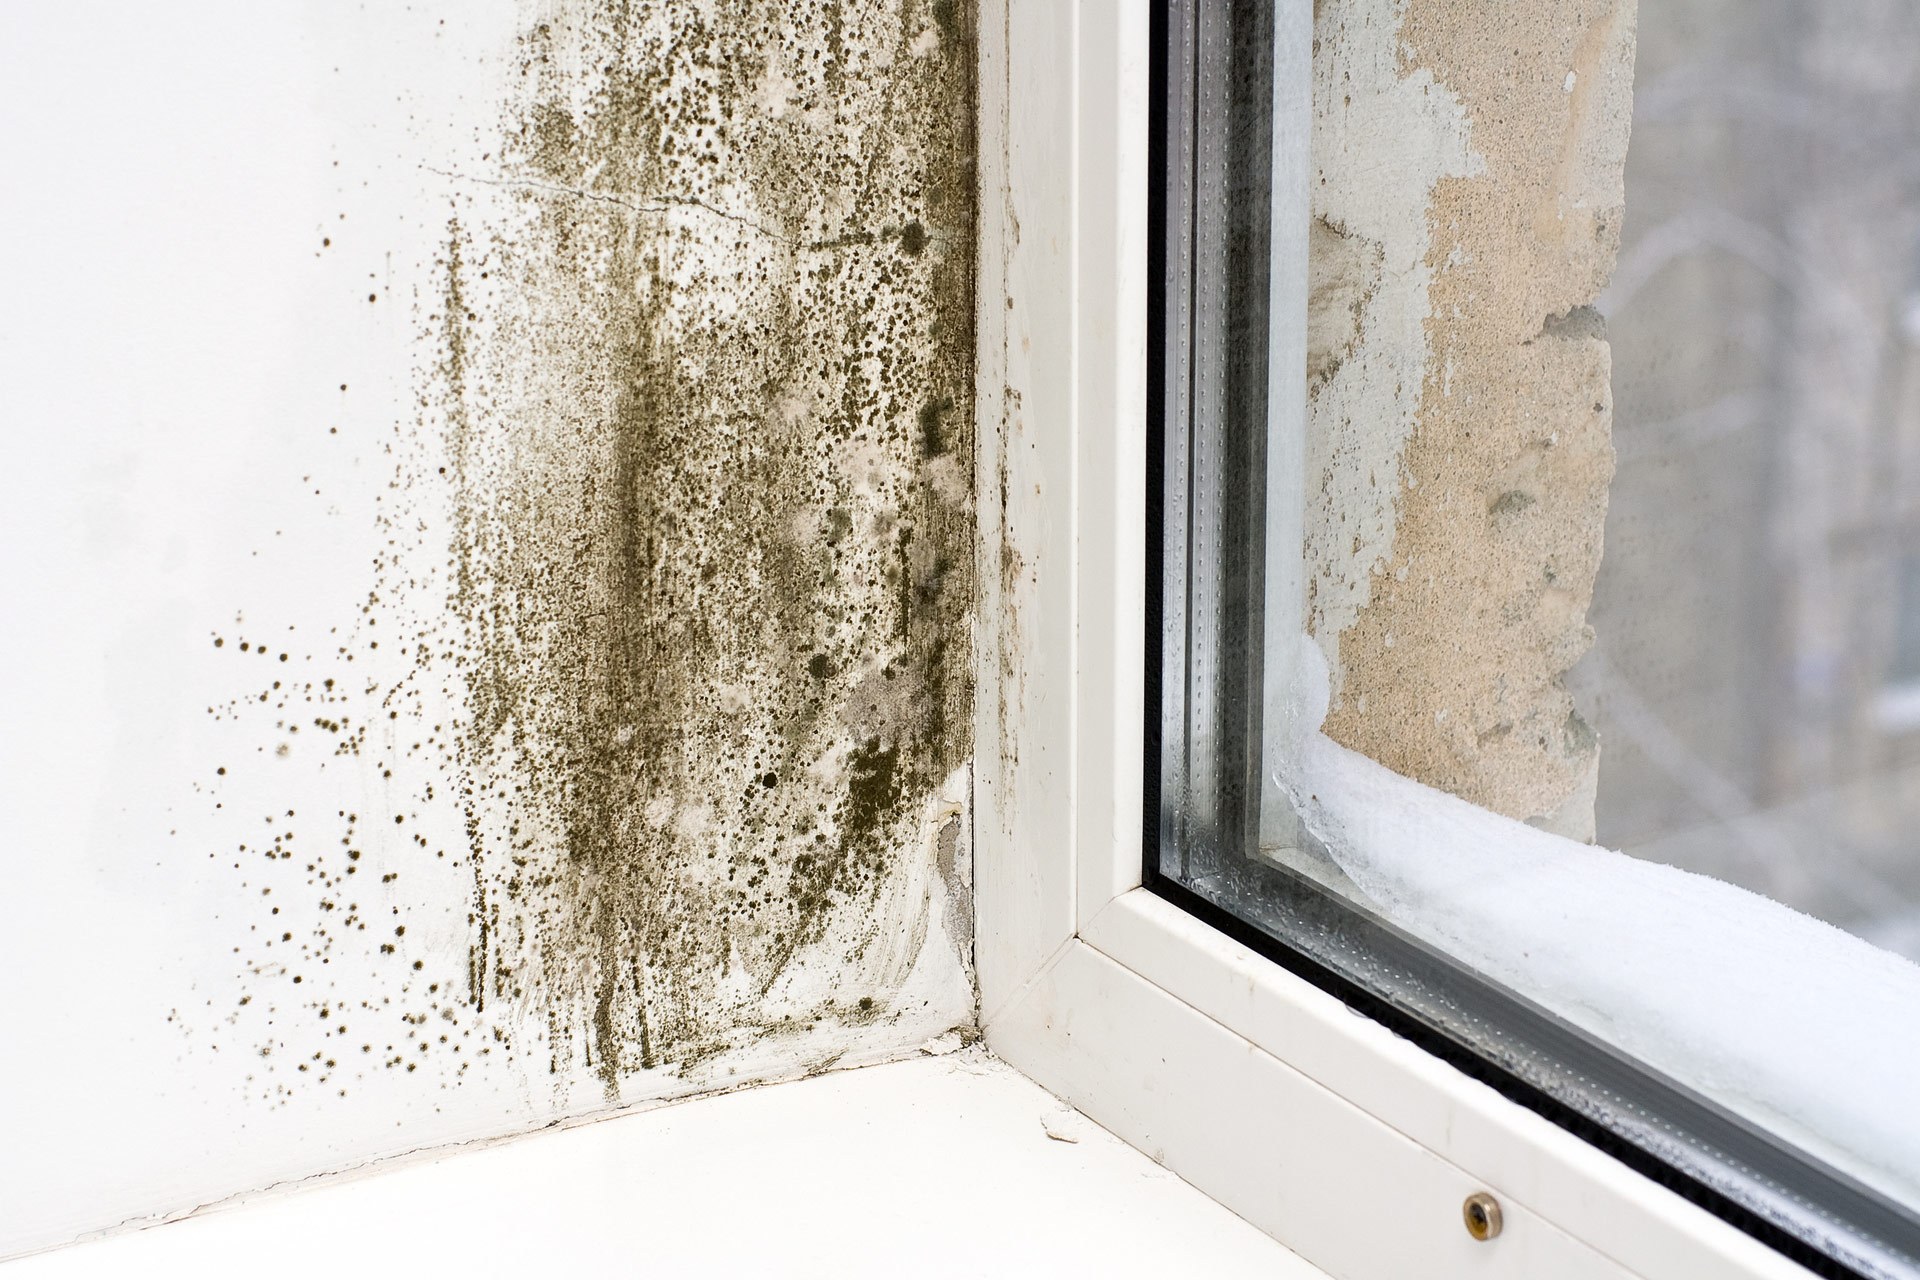 Mold inside the home near a window